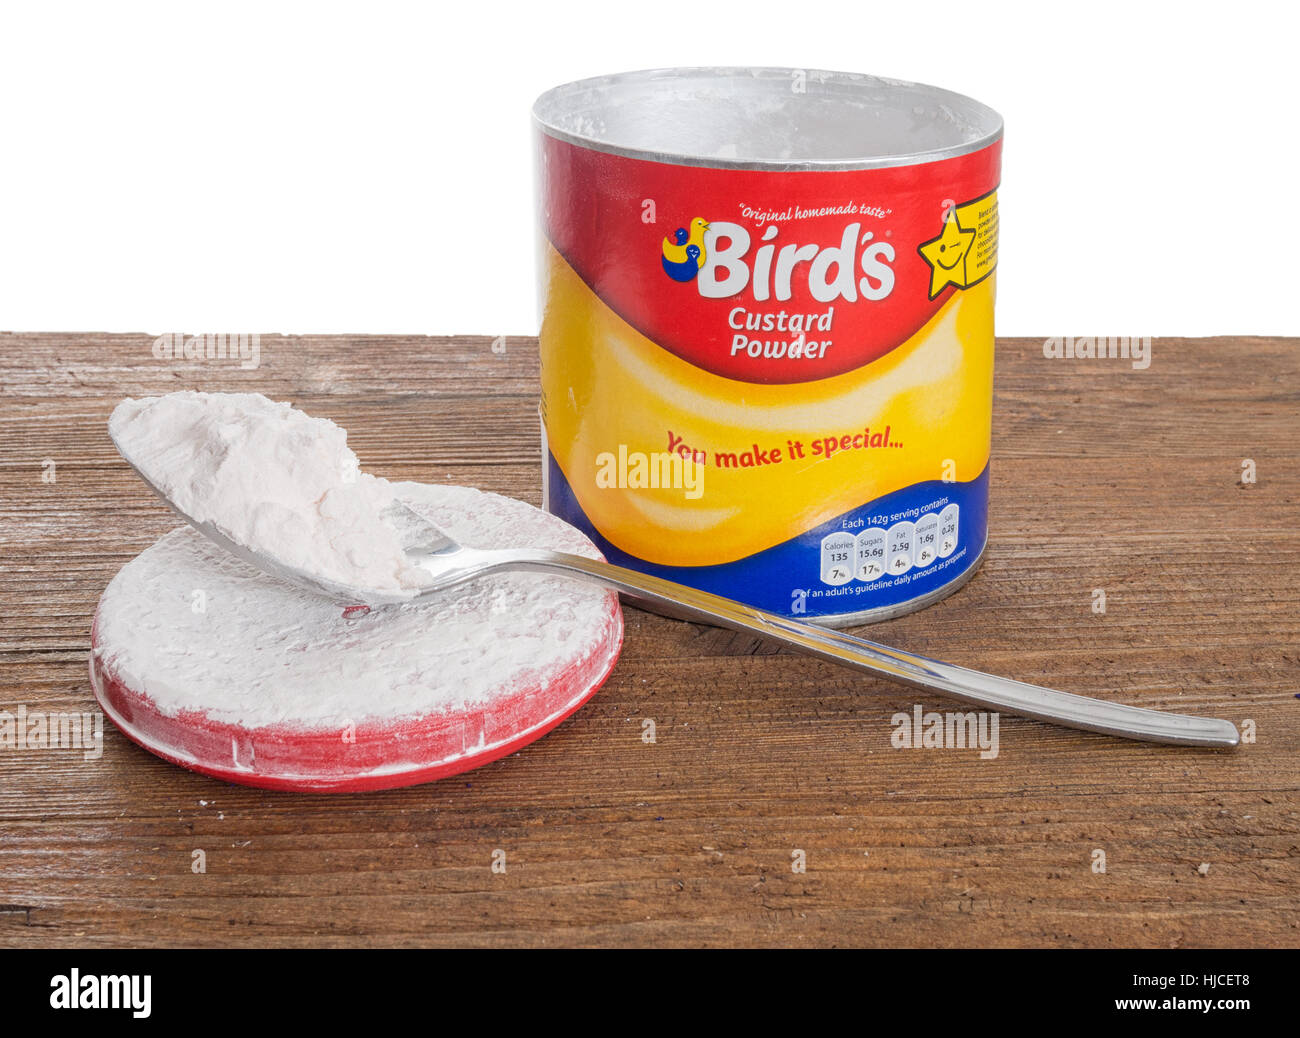 Birds custard powder. Cornflour based product. Egg-free. Stock Photo